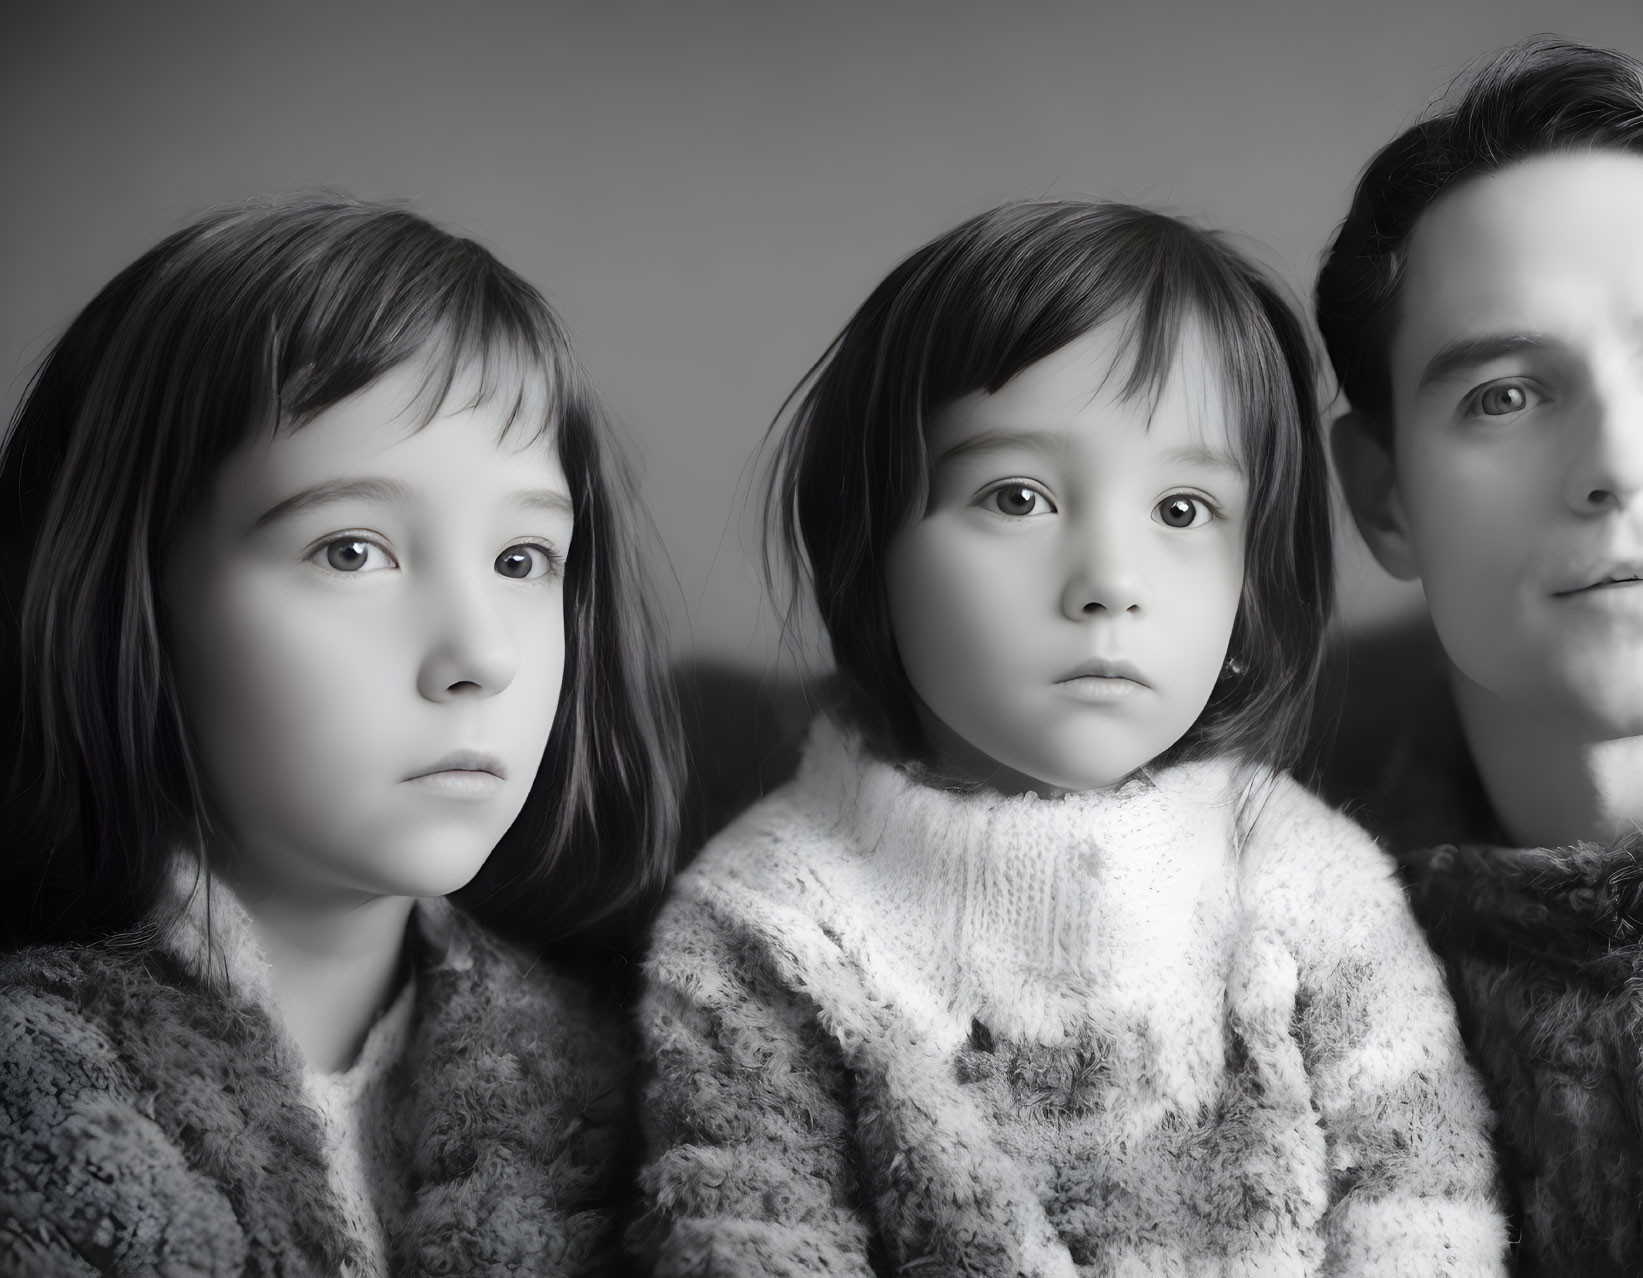 Monochrome portrait of man & children in cozy sweaters